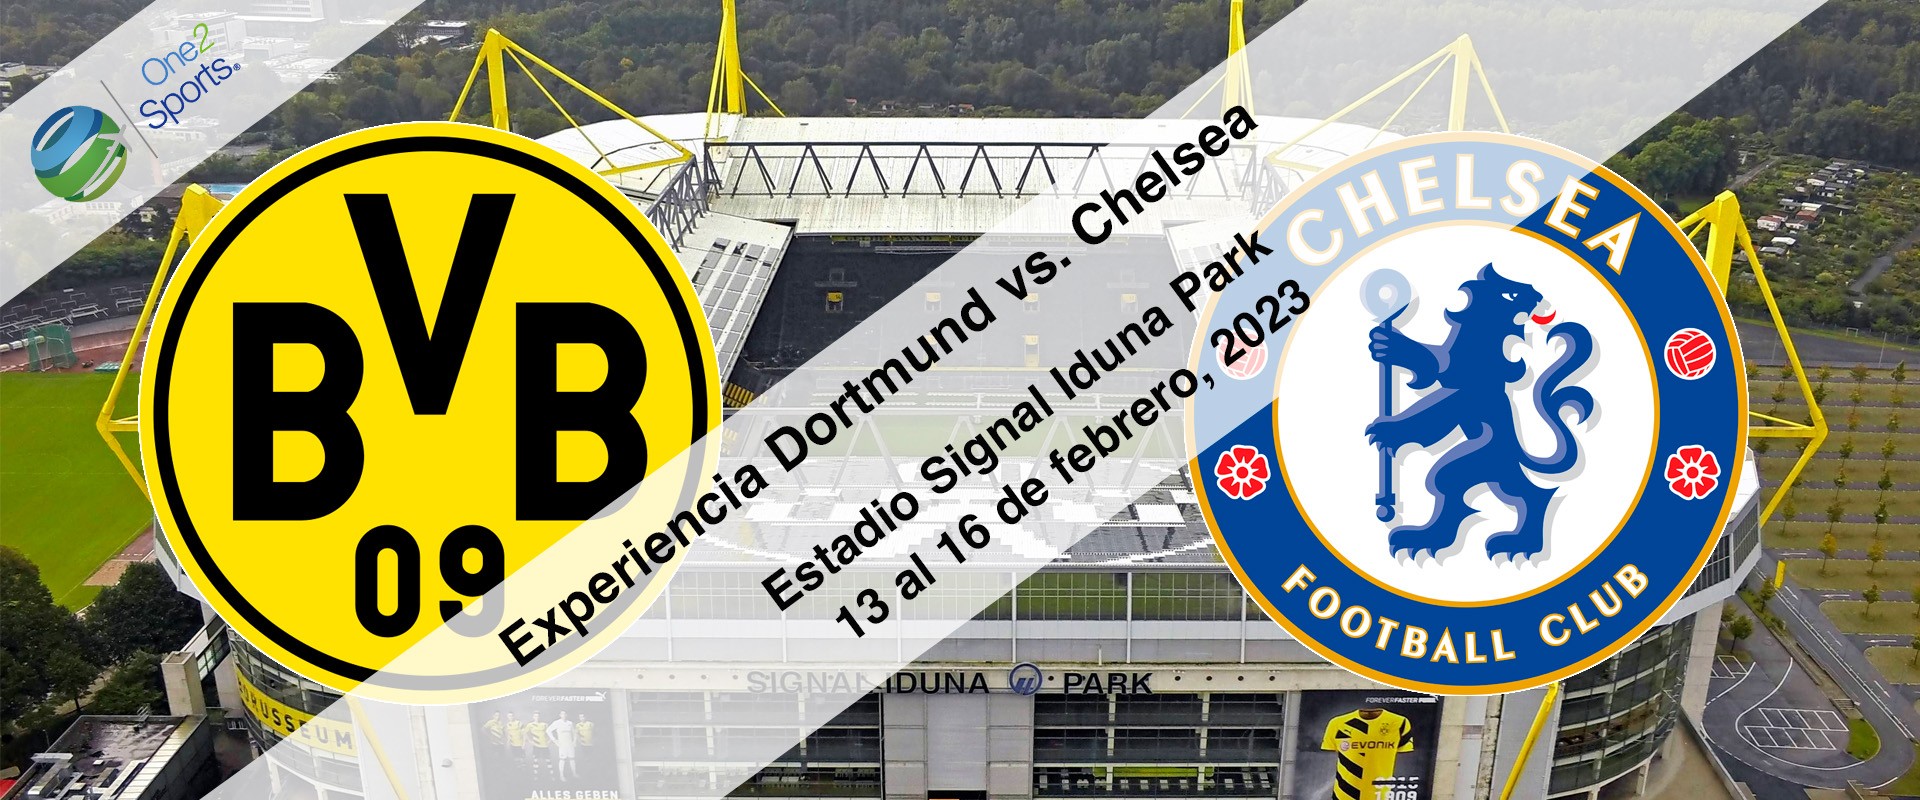 Dortmund vs Chelsea